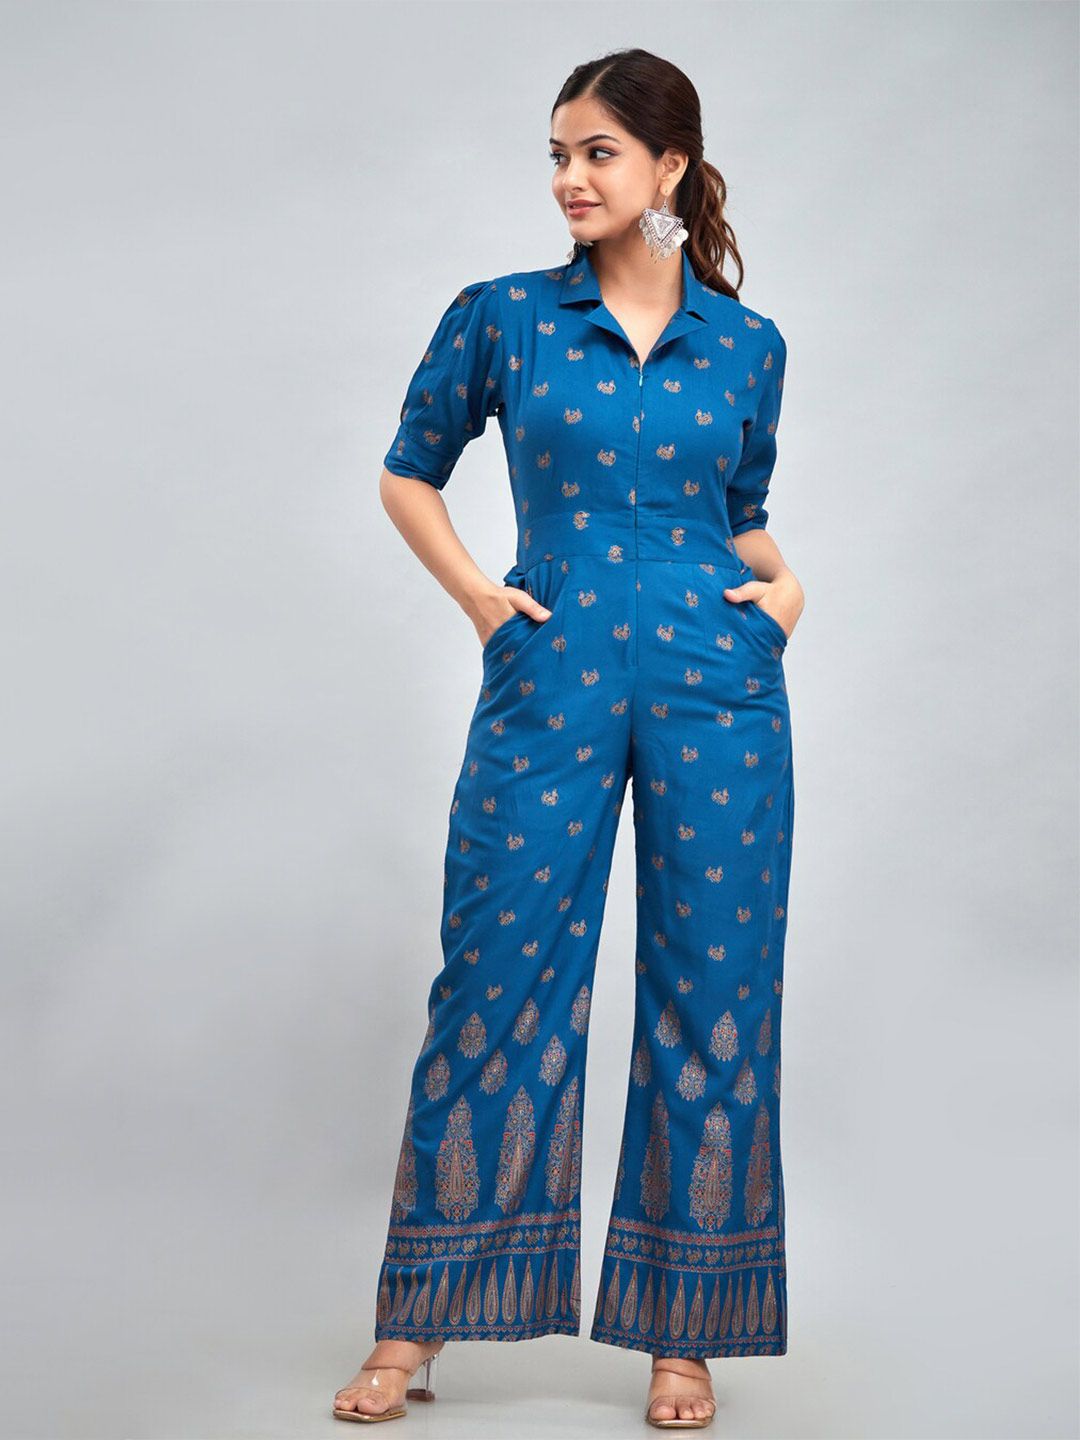 DRESSAR Ethnic Motifs Printed Basic Jumpsuit Price in India